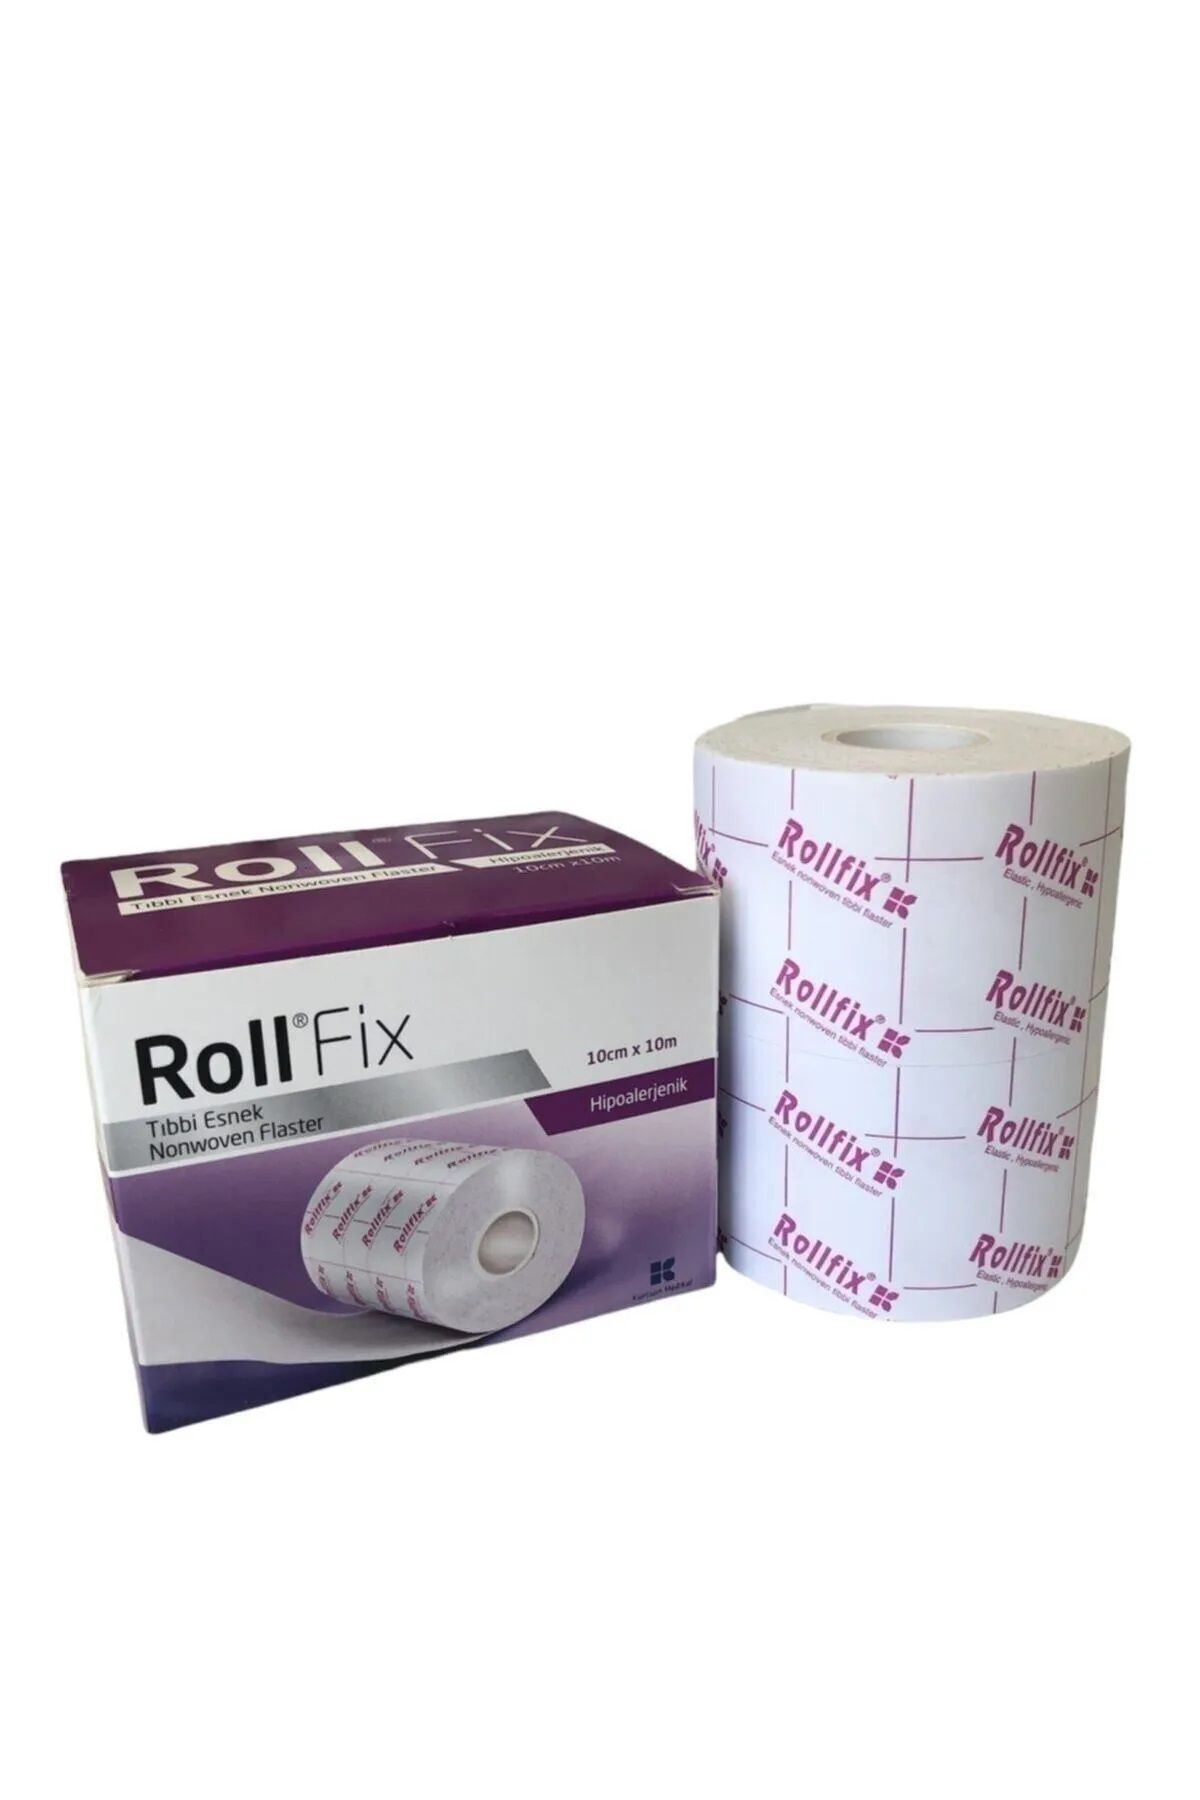 Roll Fix Flaster Esnek Tıbbi Flaster Hipoalerjenik 10cm x 10m - 1 Kutu